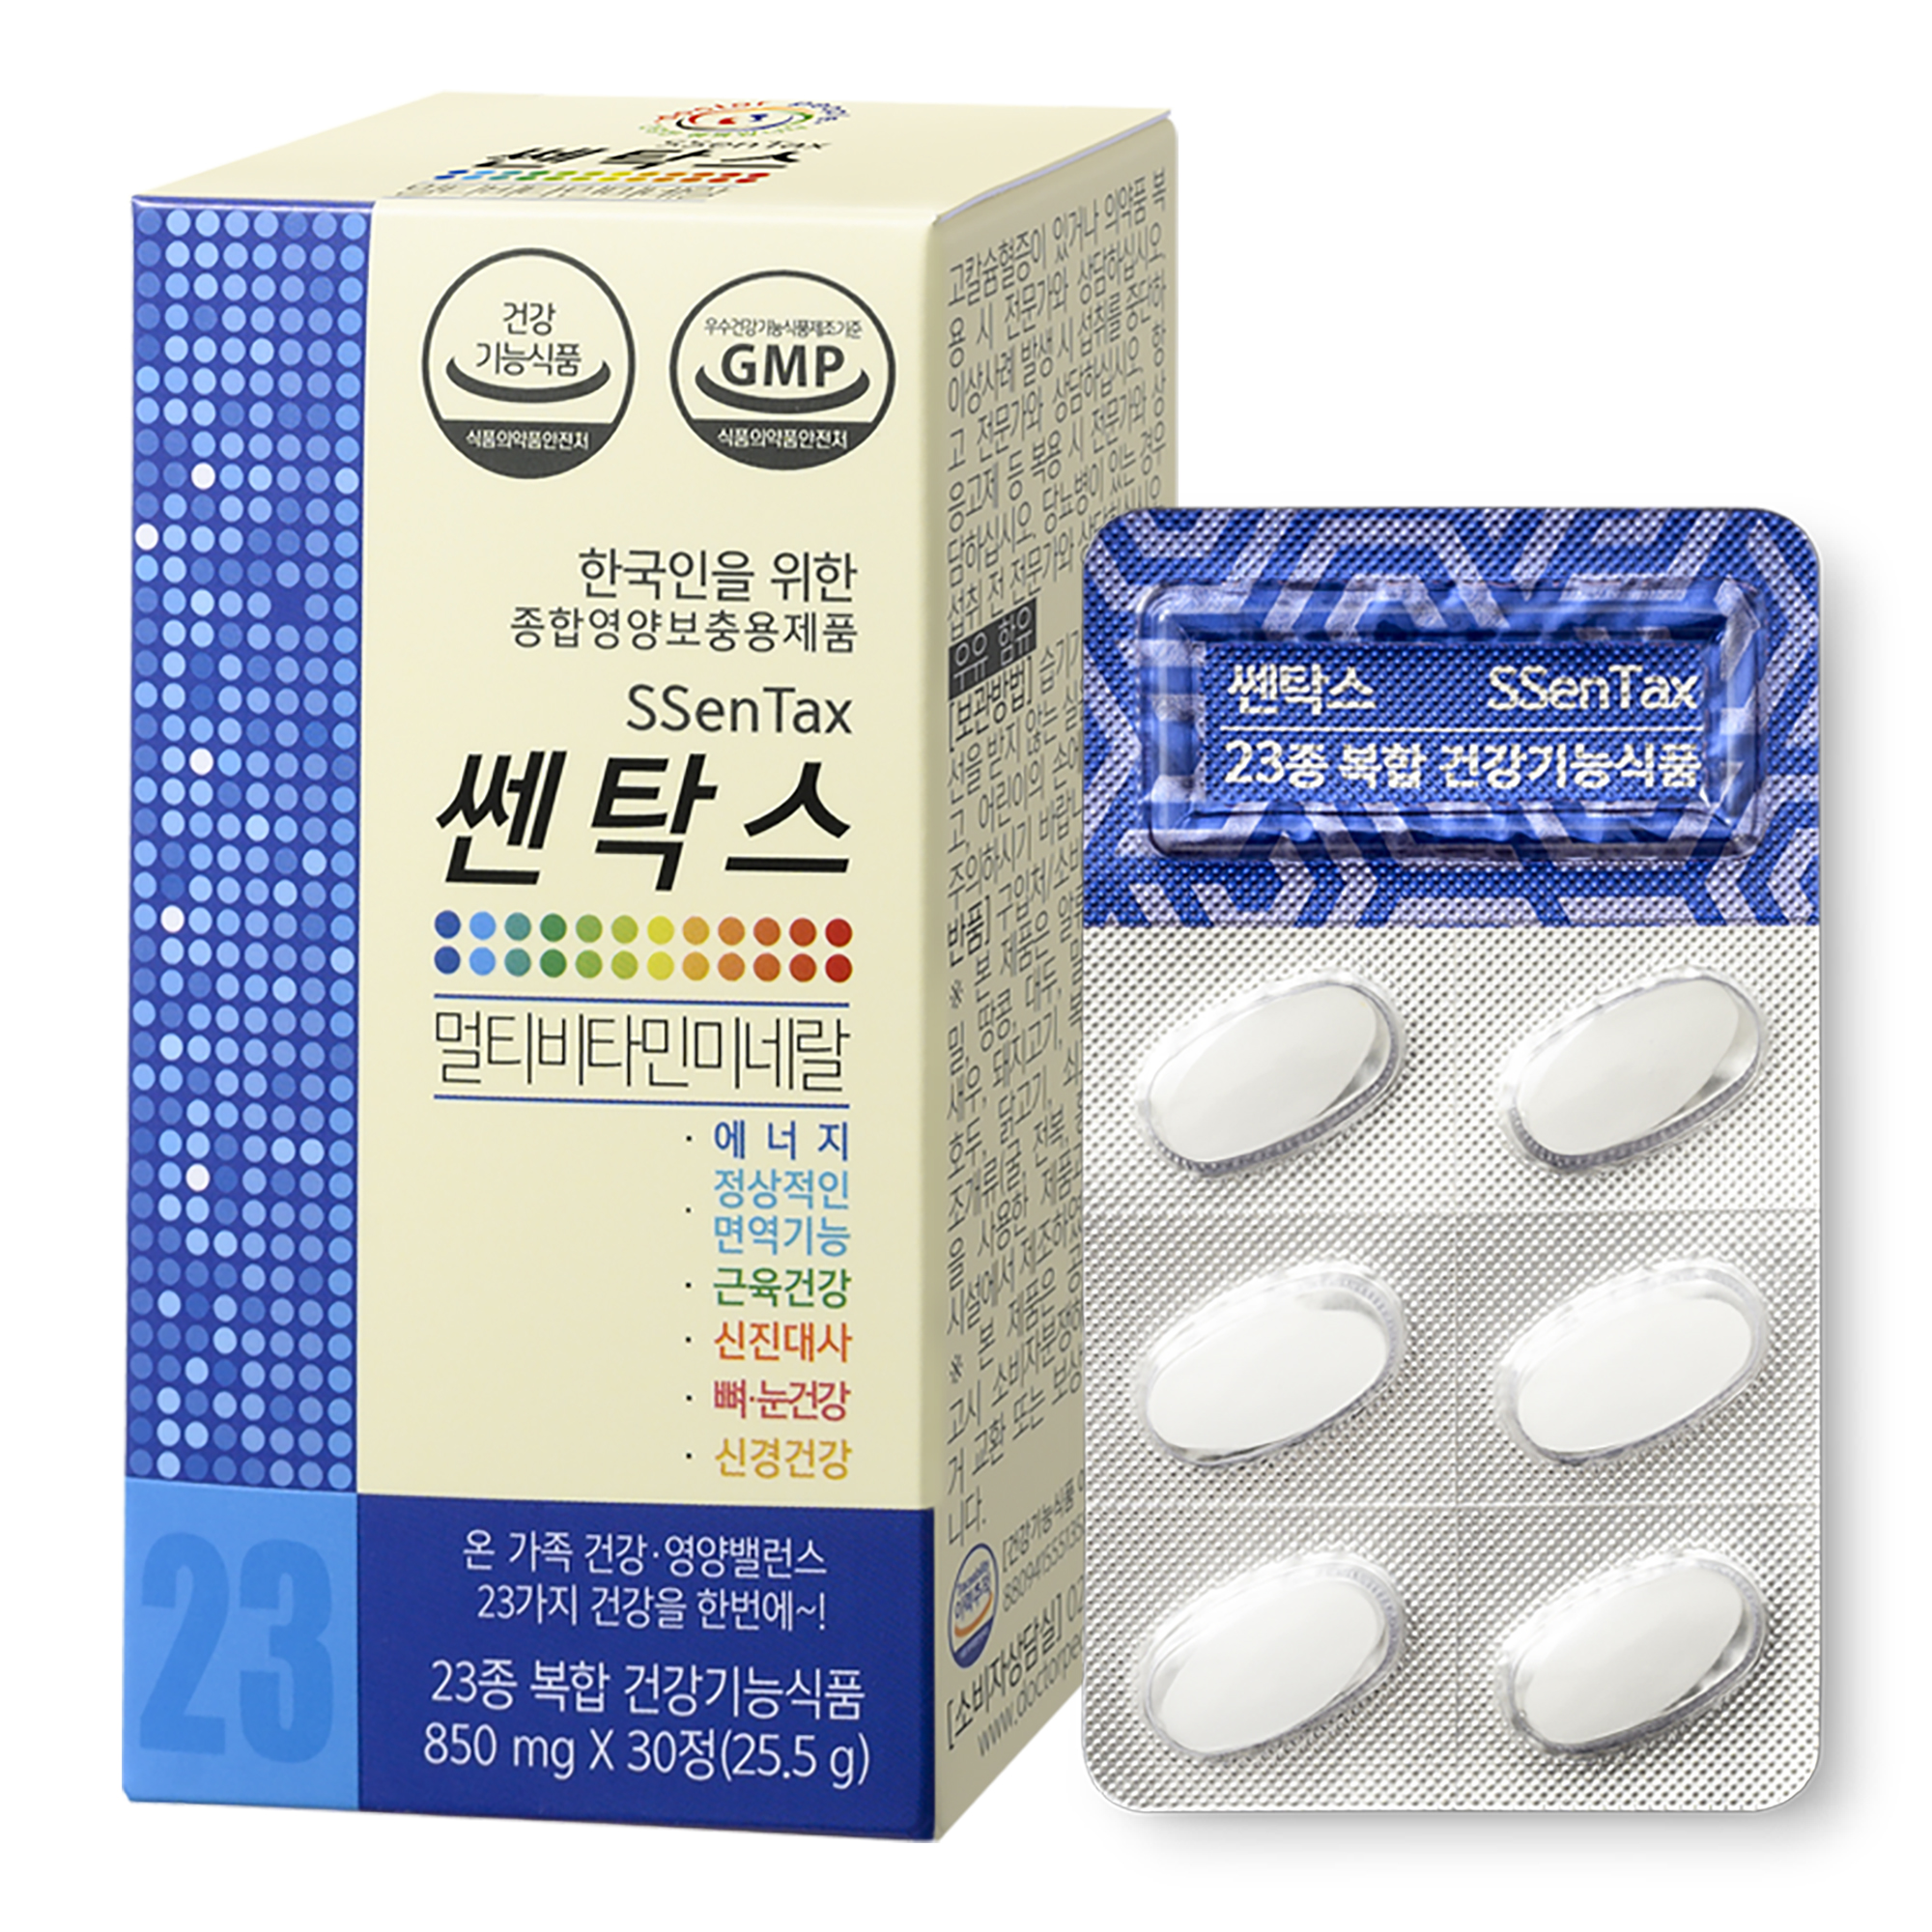 NEW쎈탁스 30정(PTP포장) 1box - 23종 멀티비타민 온가족 종합영양보충